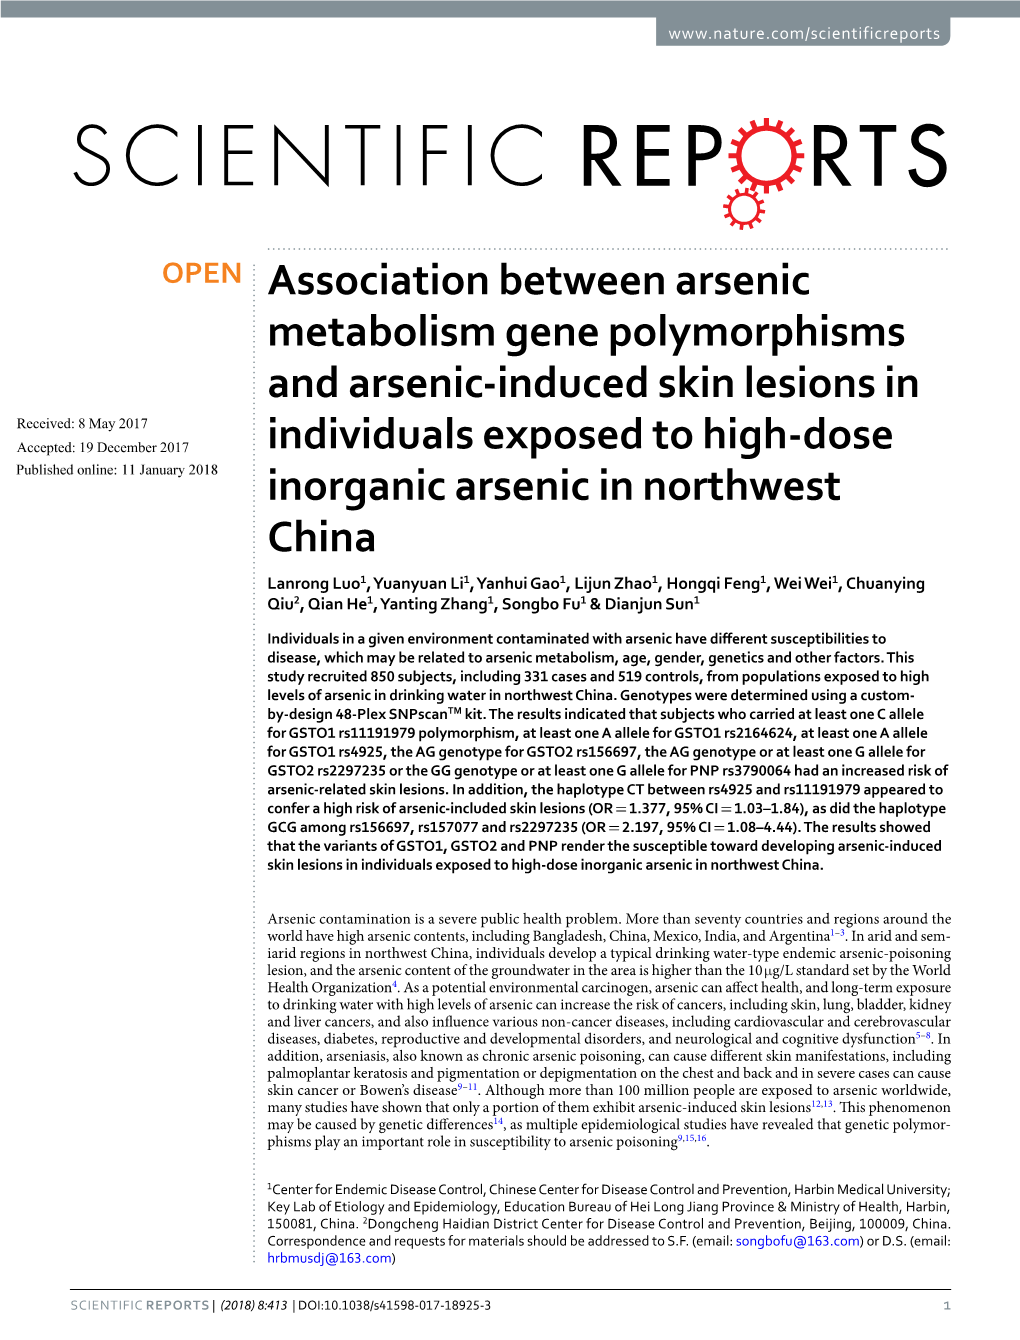 Association Between Arsenic Metabolism Gene Polymorphisms